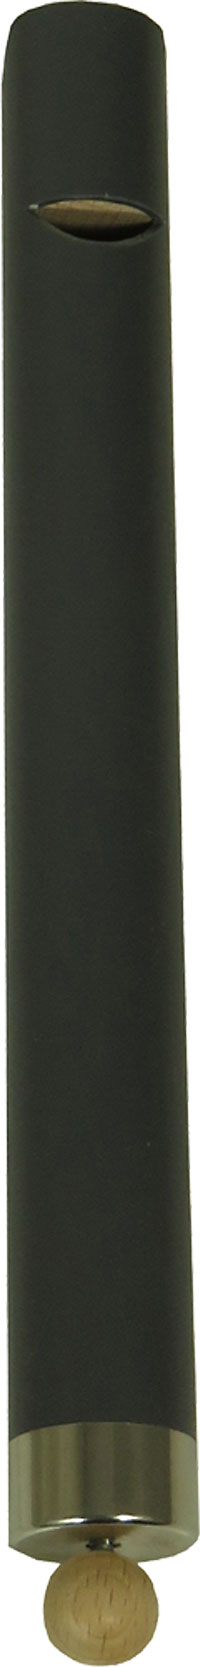 Atlas AW-F22 Plastic Swannee Whistle